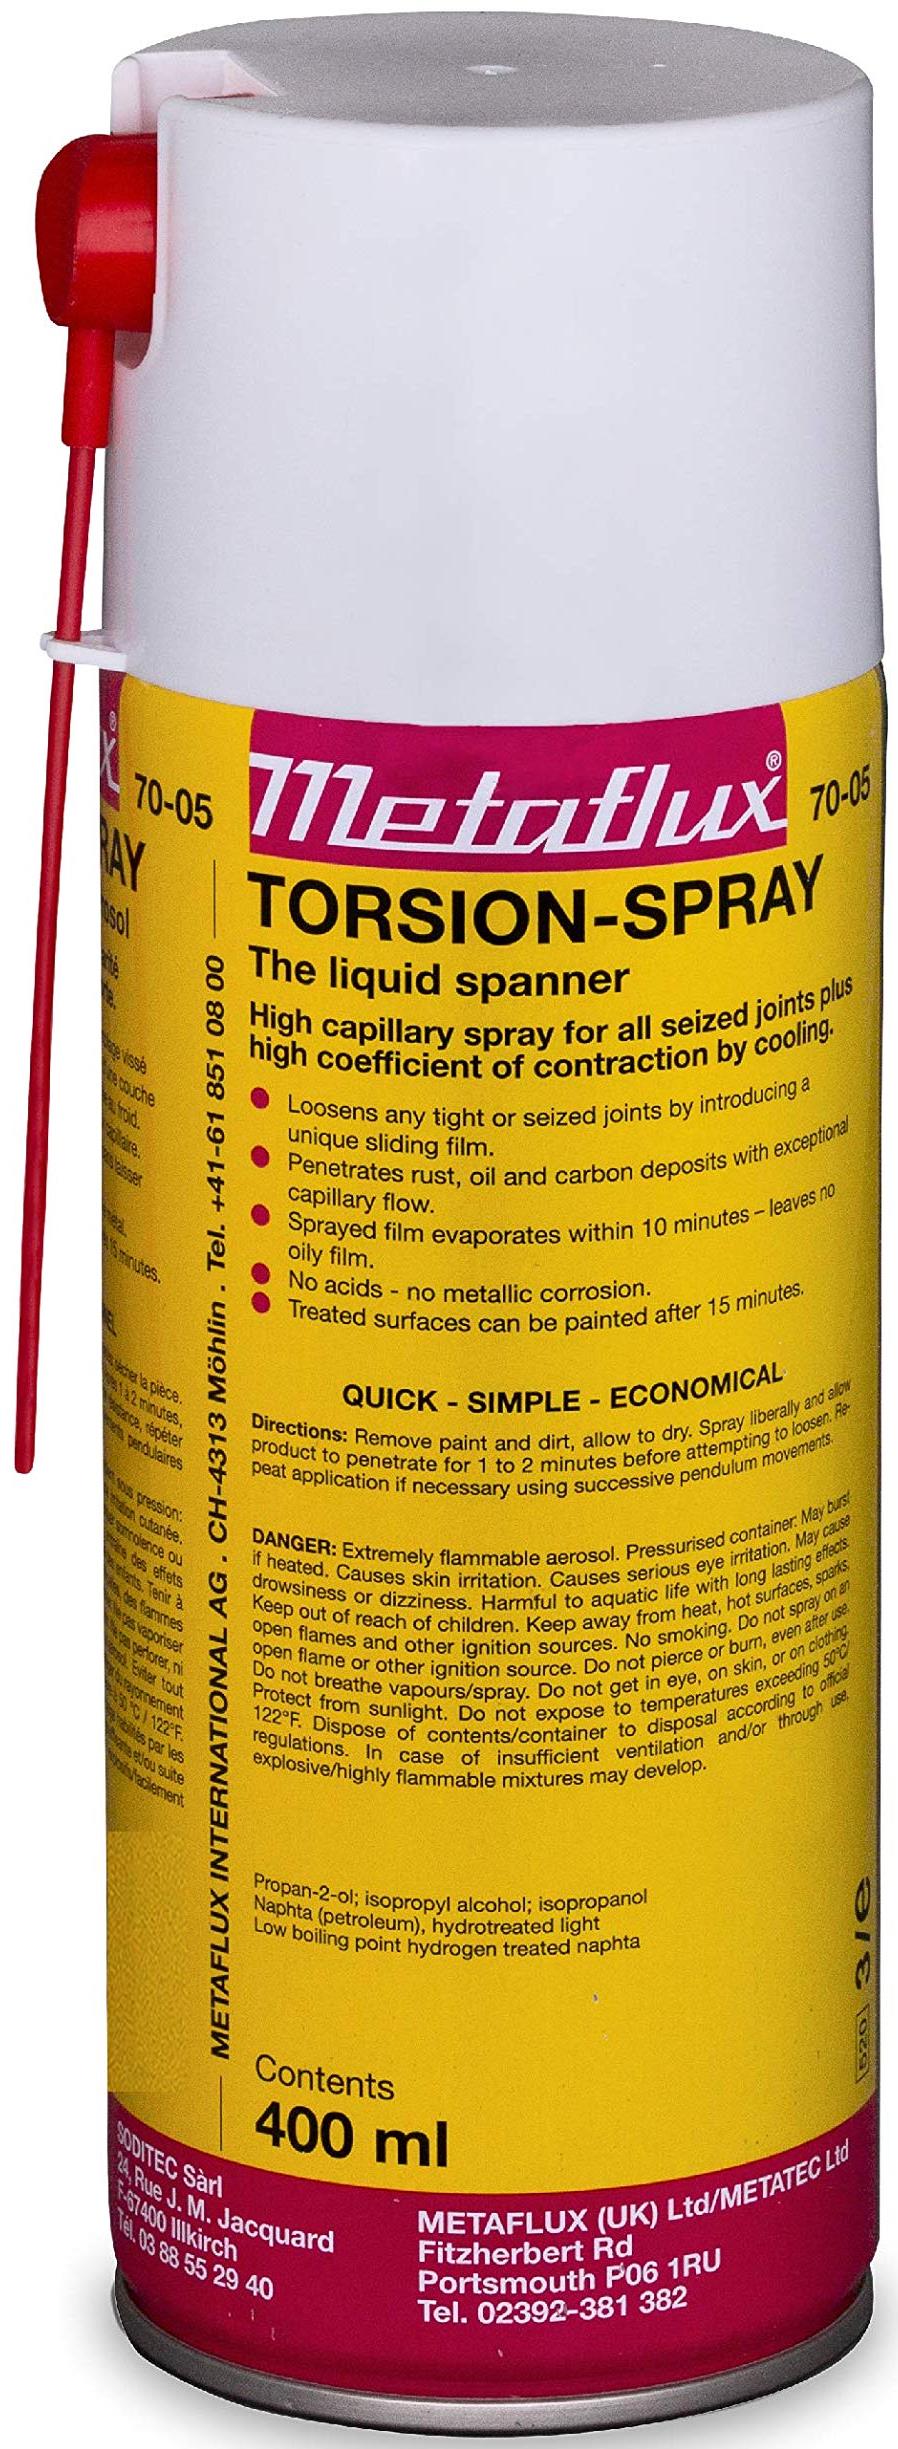 Metaflux torsion spray 400ml_5022.jpg